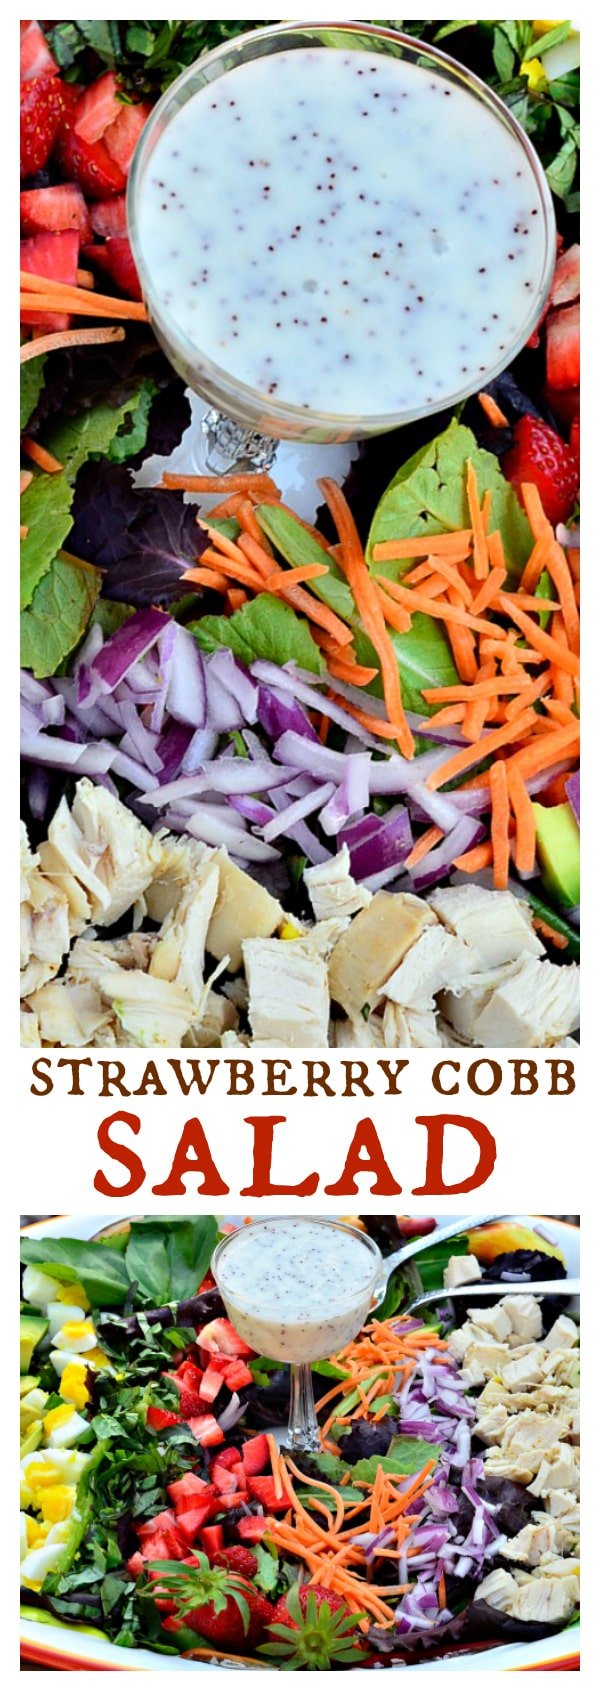 Strawberry Cobb Salad Recipe with Creamy Poppyseed Dressing